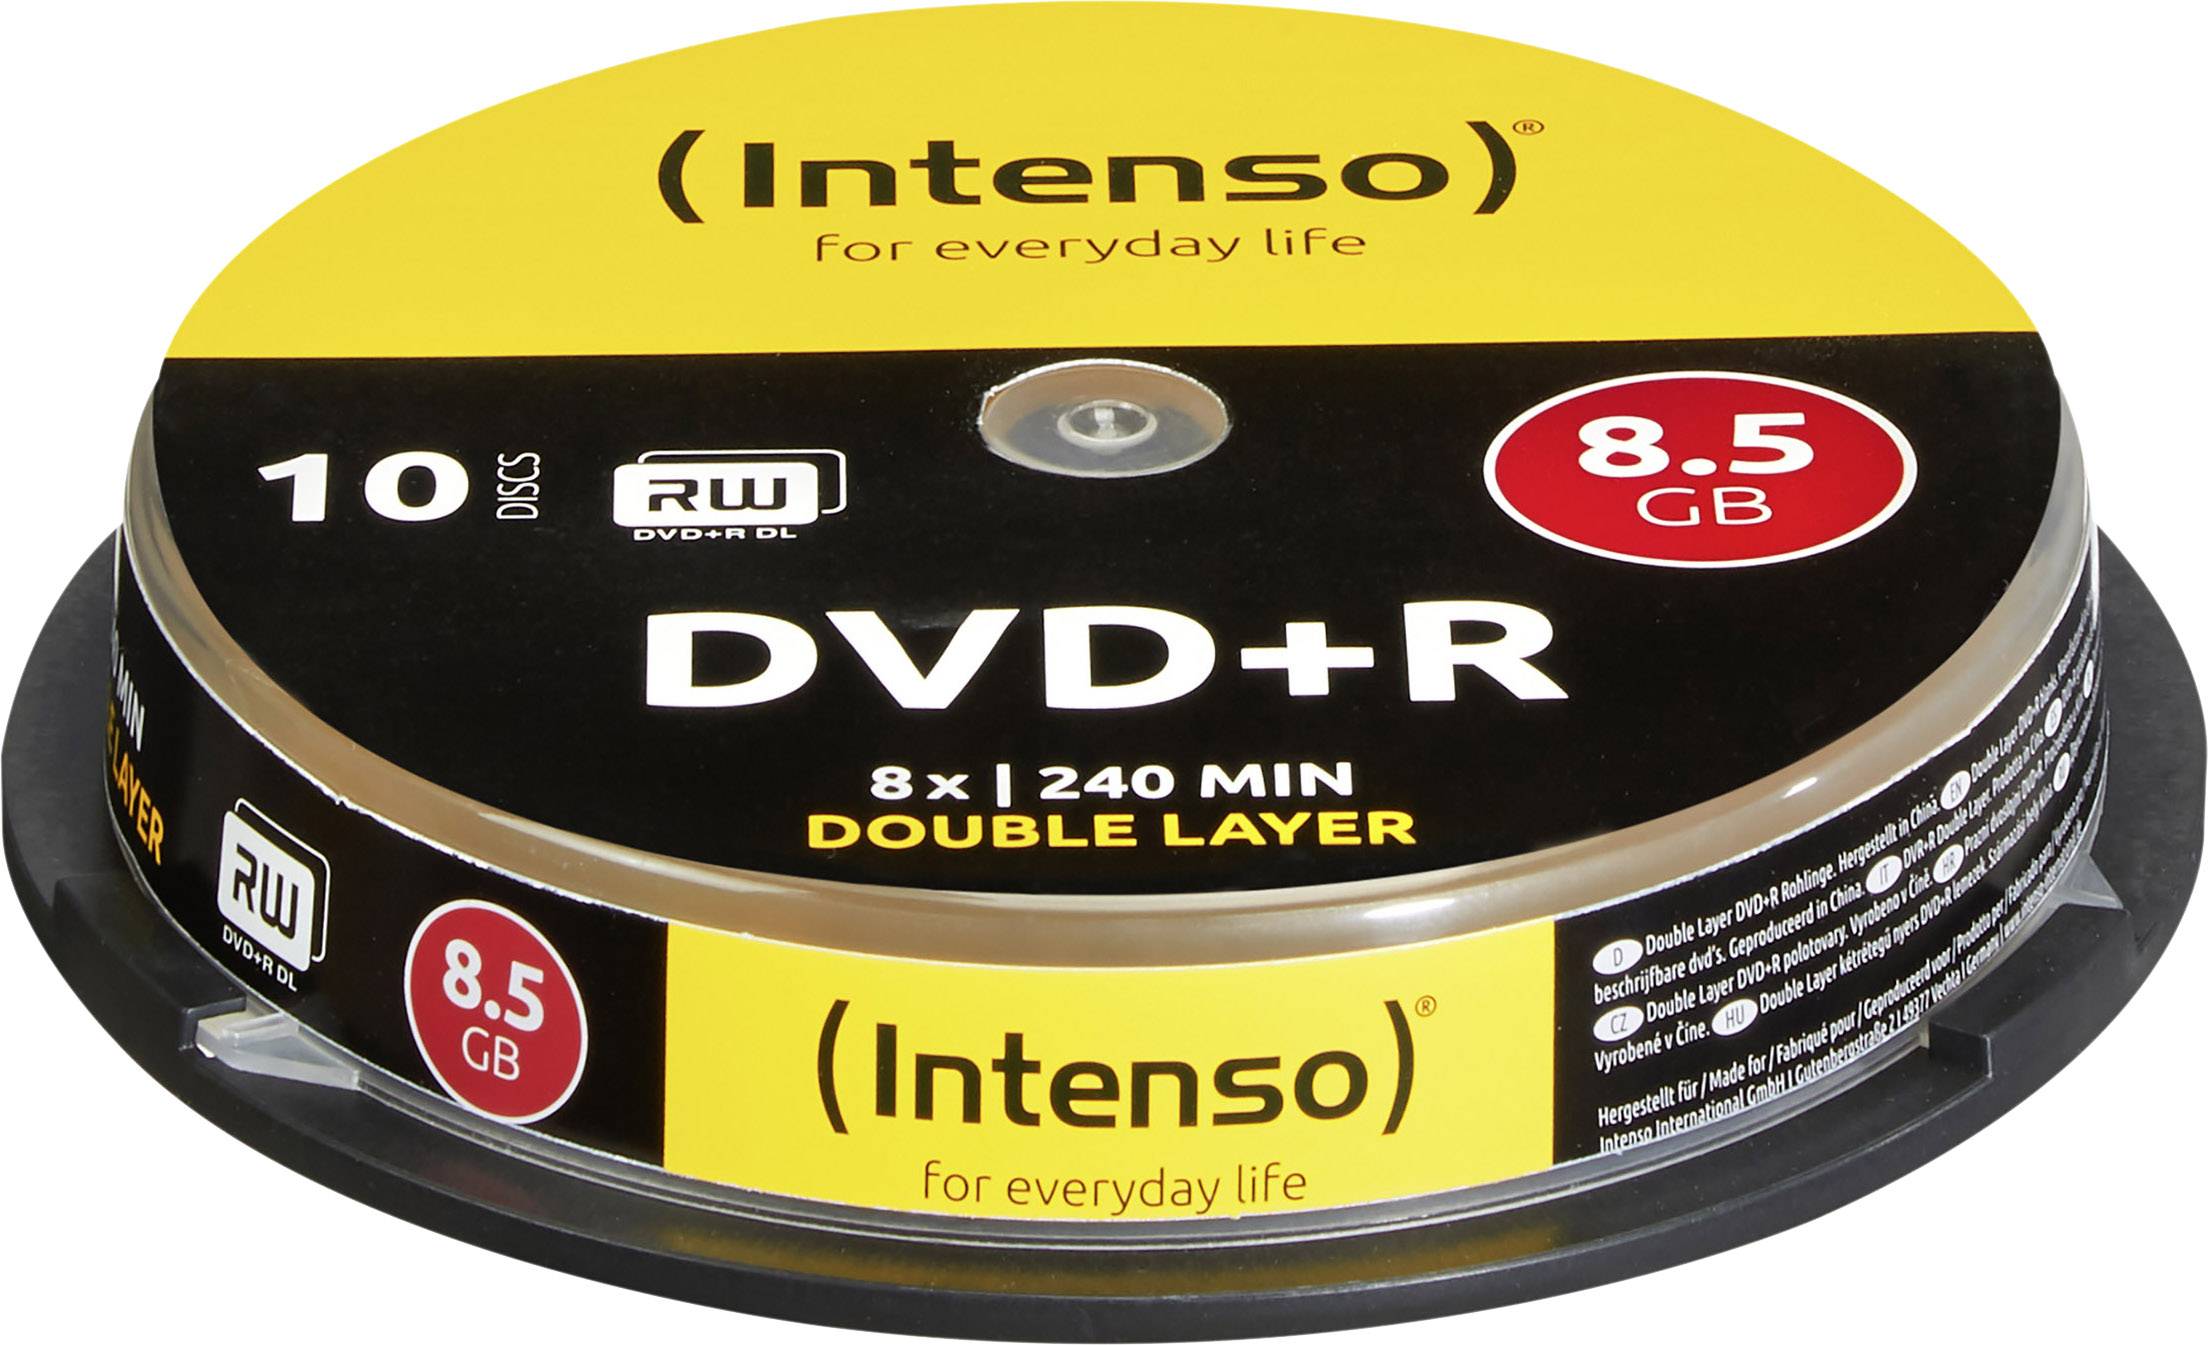 DVD+R DL vierge Intenso 4311142 10 pc(s) 8.5 GB 240 min - Conrad